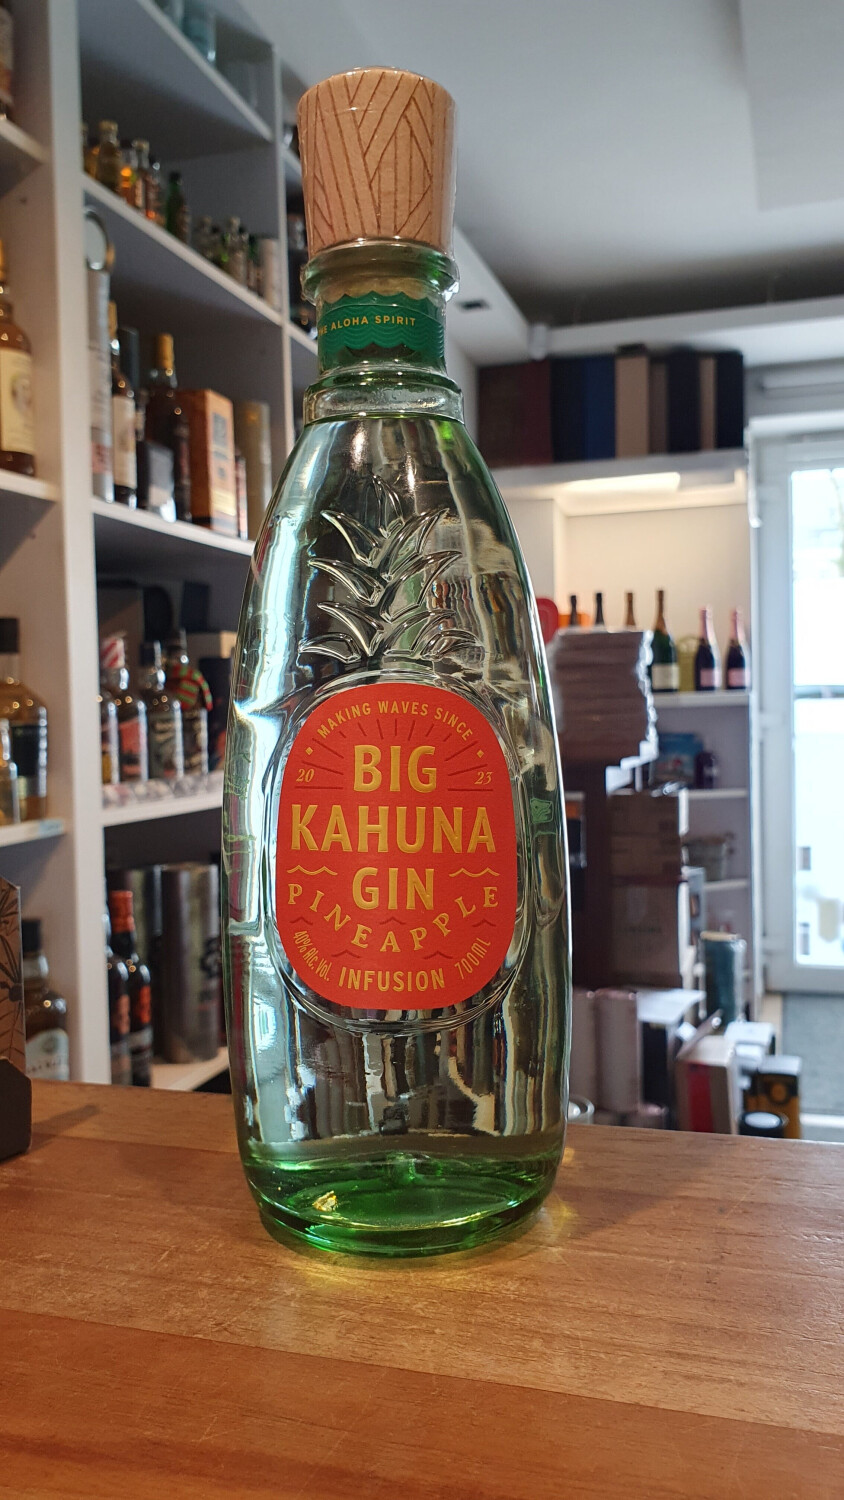 40% Kahuna ab bei 29,80 Preisvergleich | Perola 0,7l Gin Big €